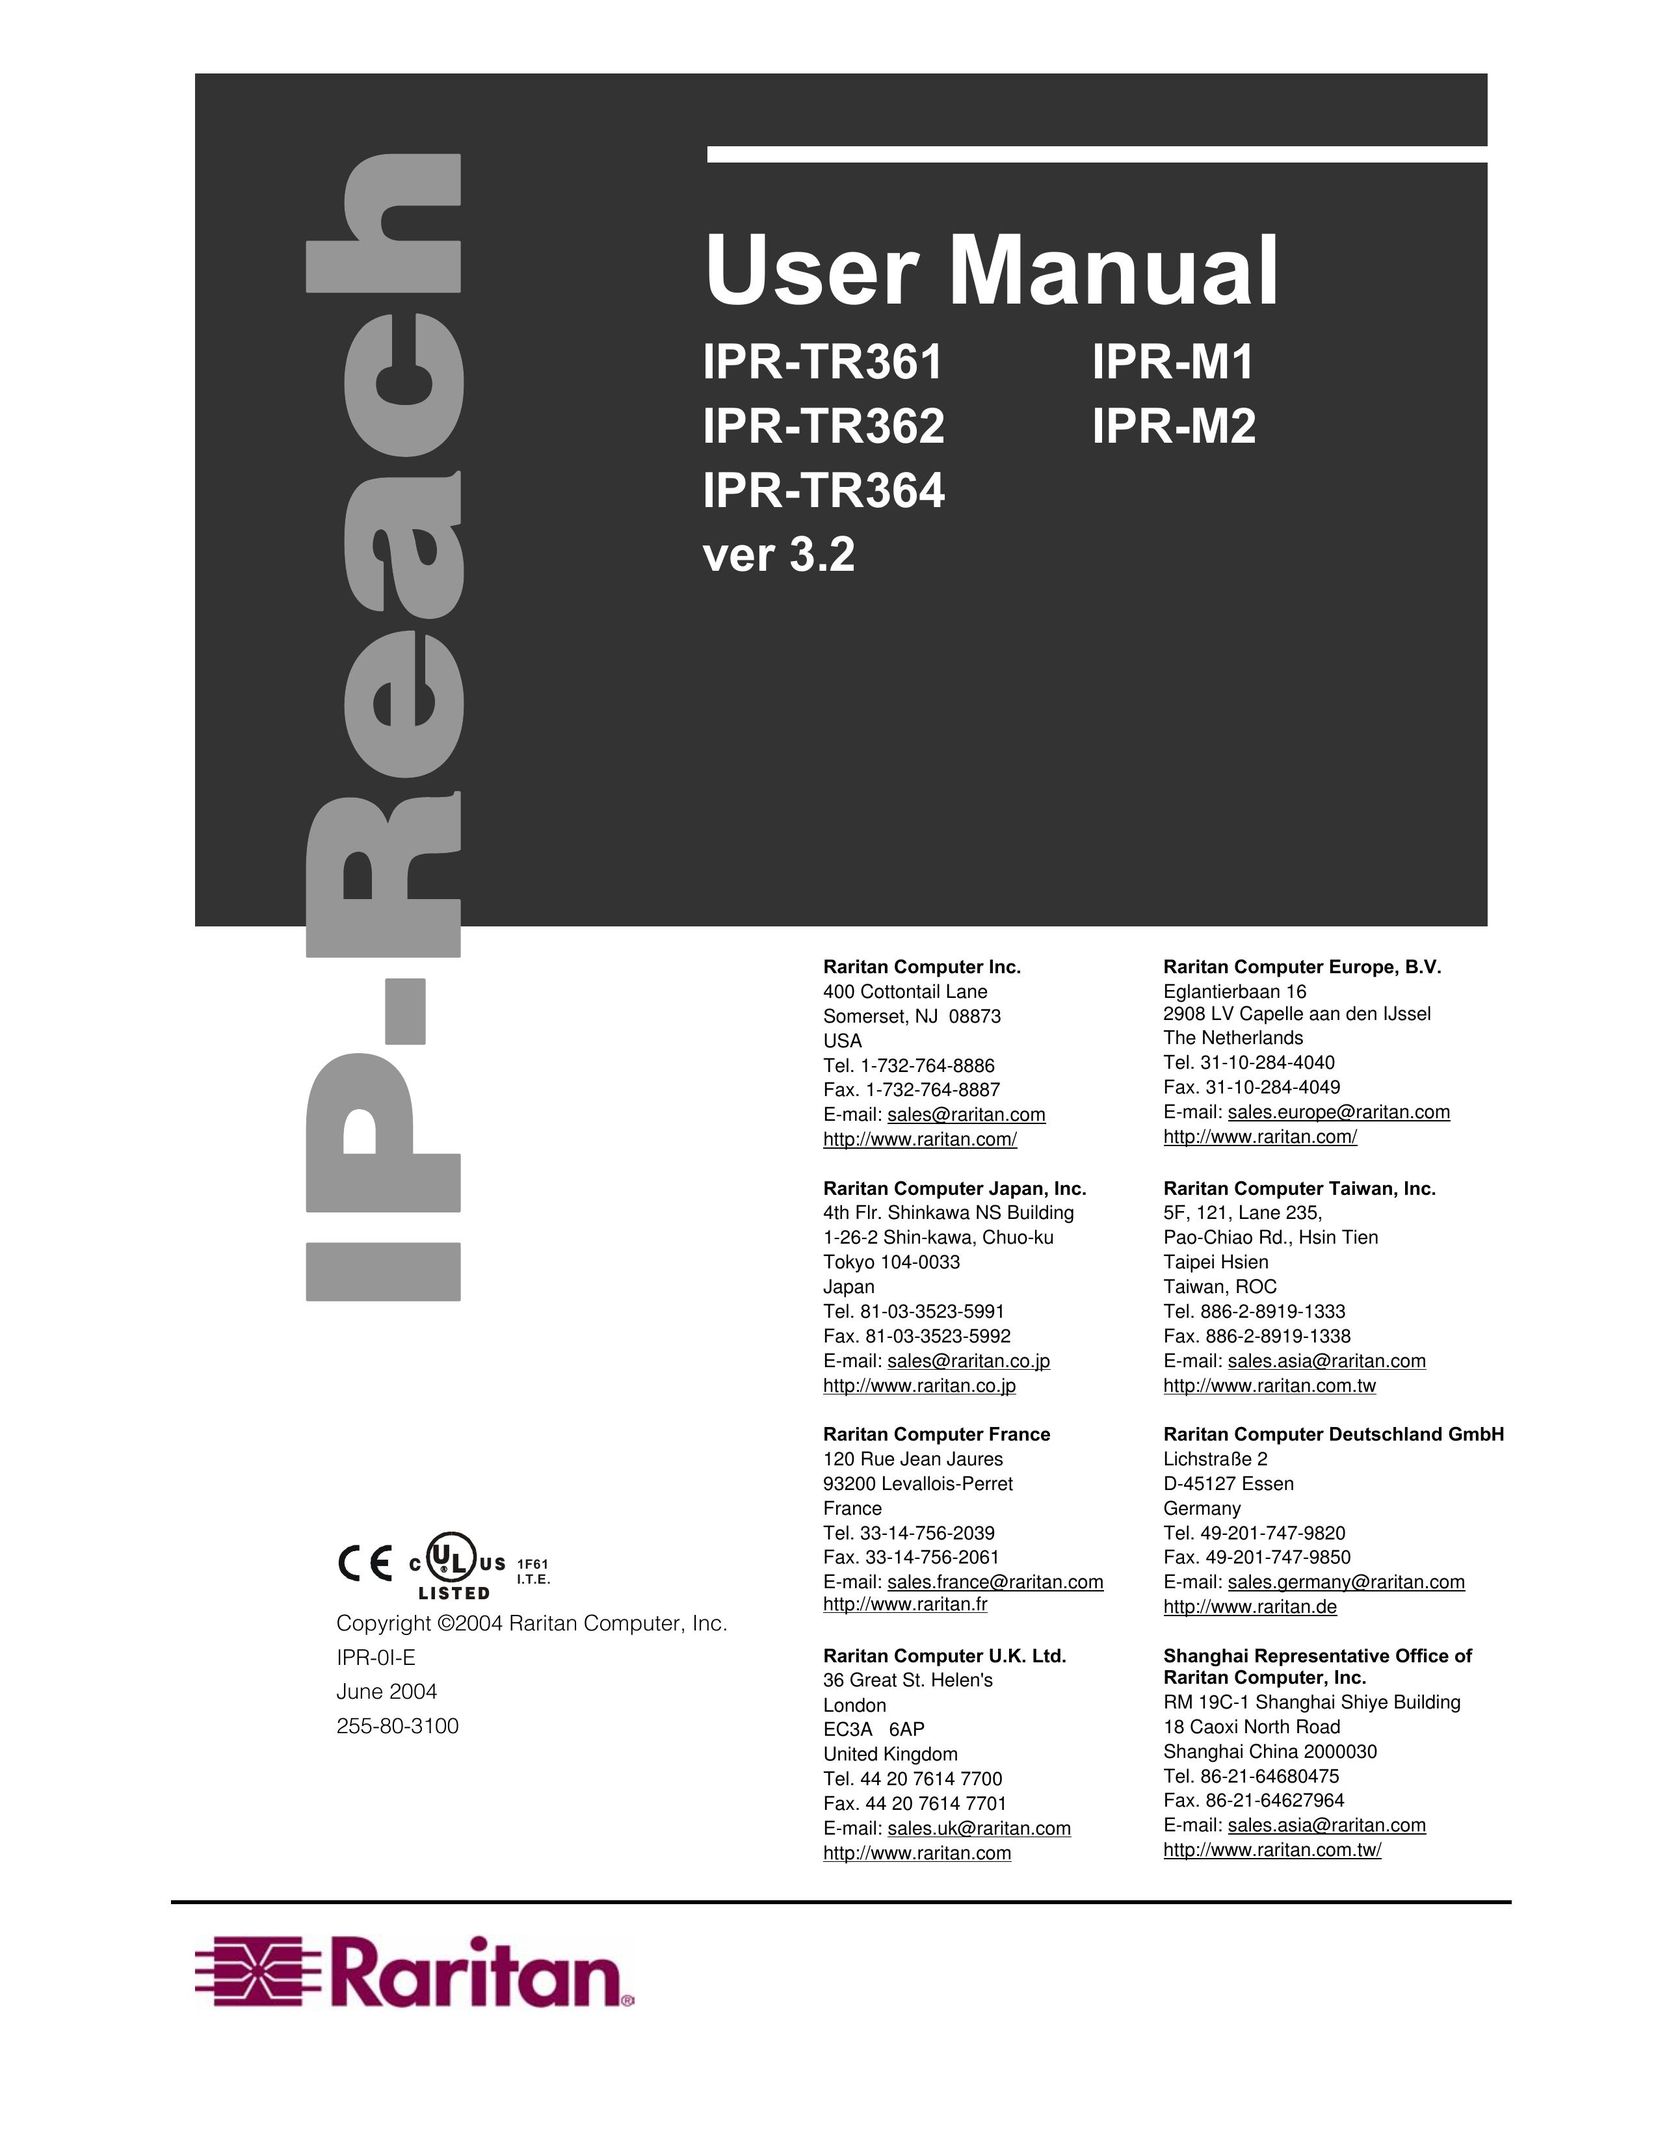 Raritan Computer IPR-M2 Network Card User Manual